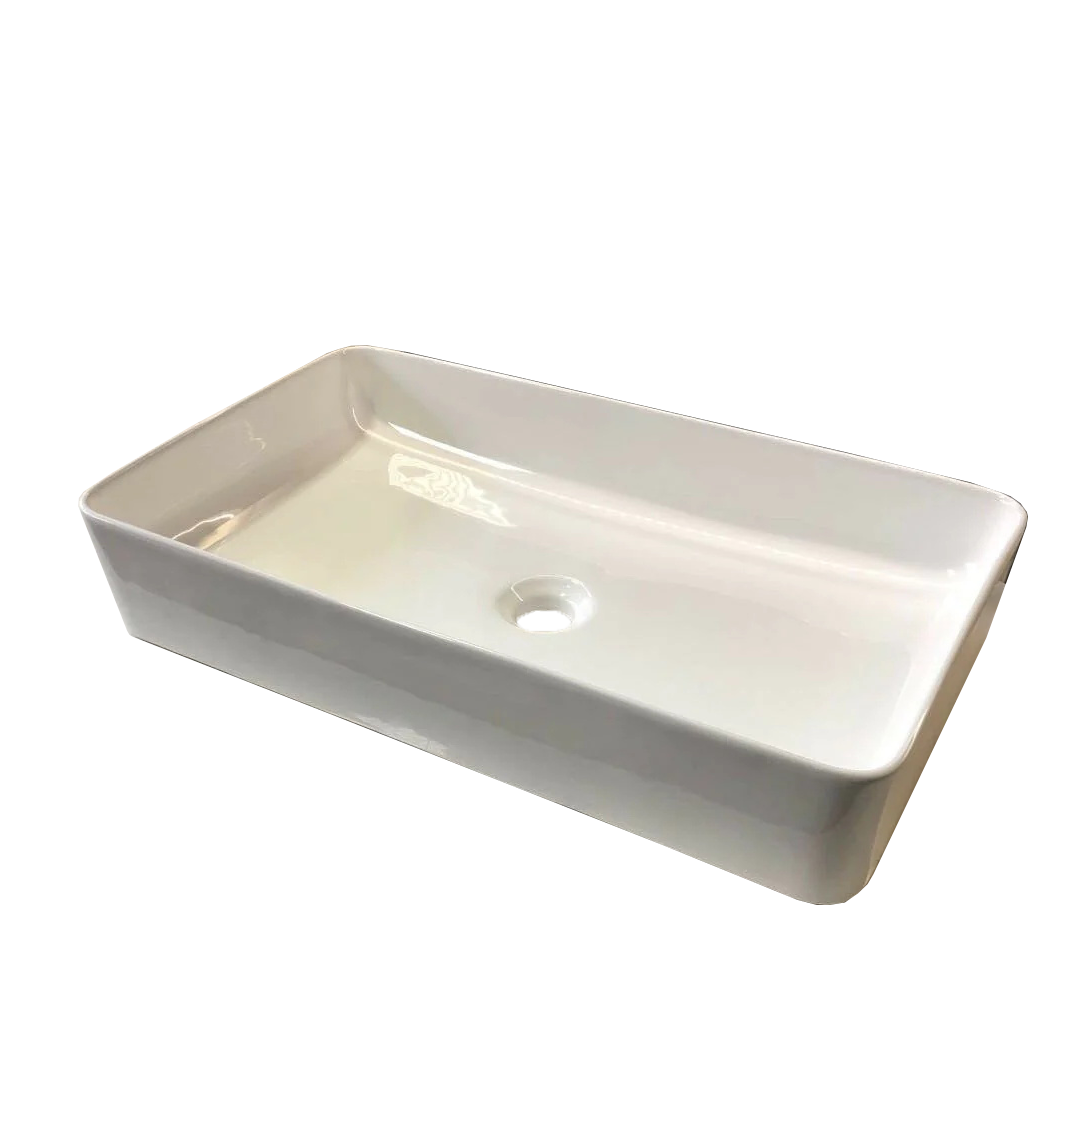 Slim Edge 605*350*110 Vitreous China Porcelain above counter basin